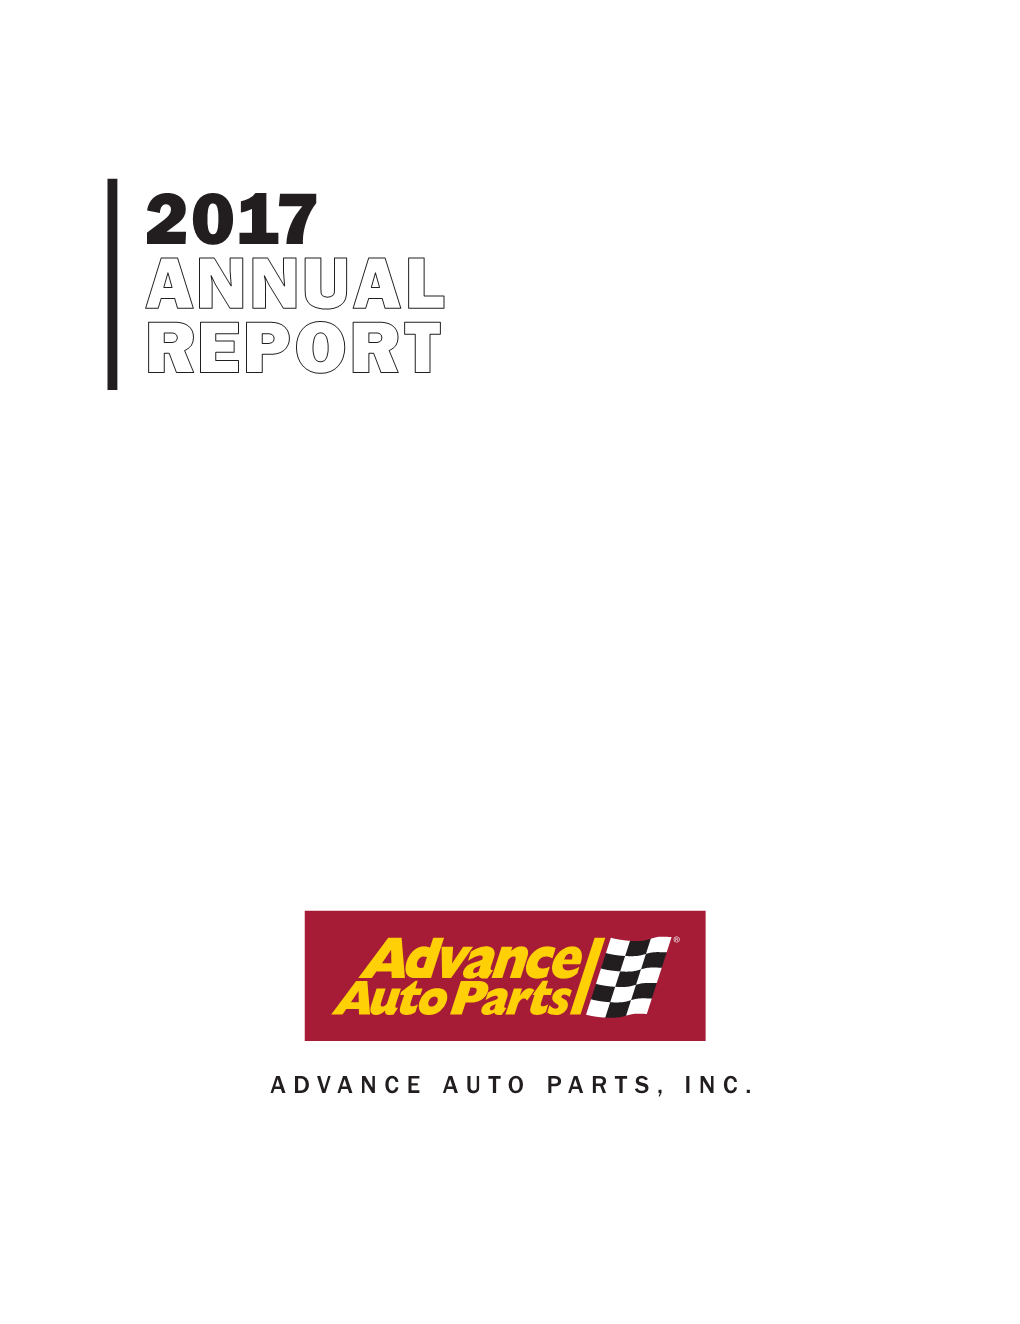 Advance Auto Parts, Inc. Company Highlights